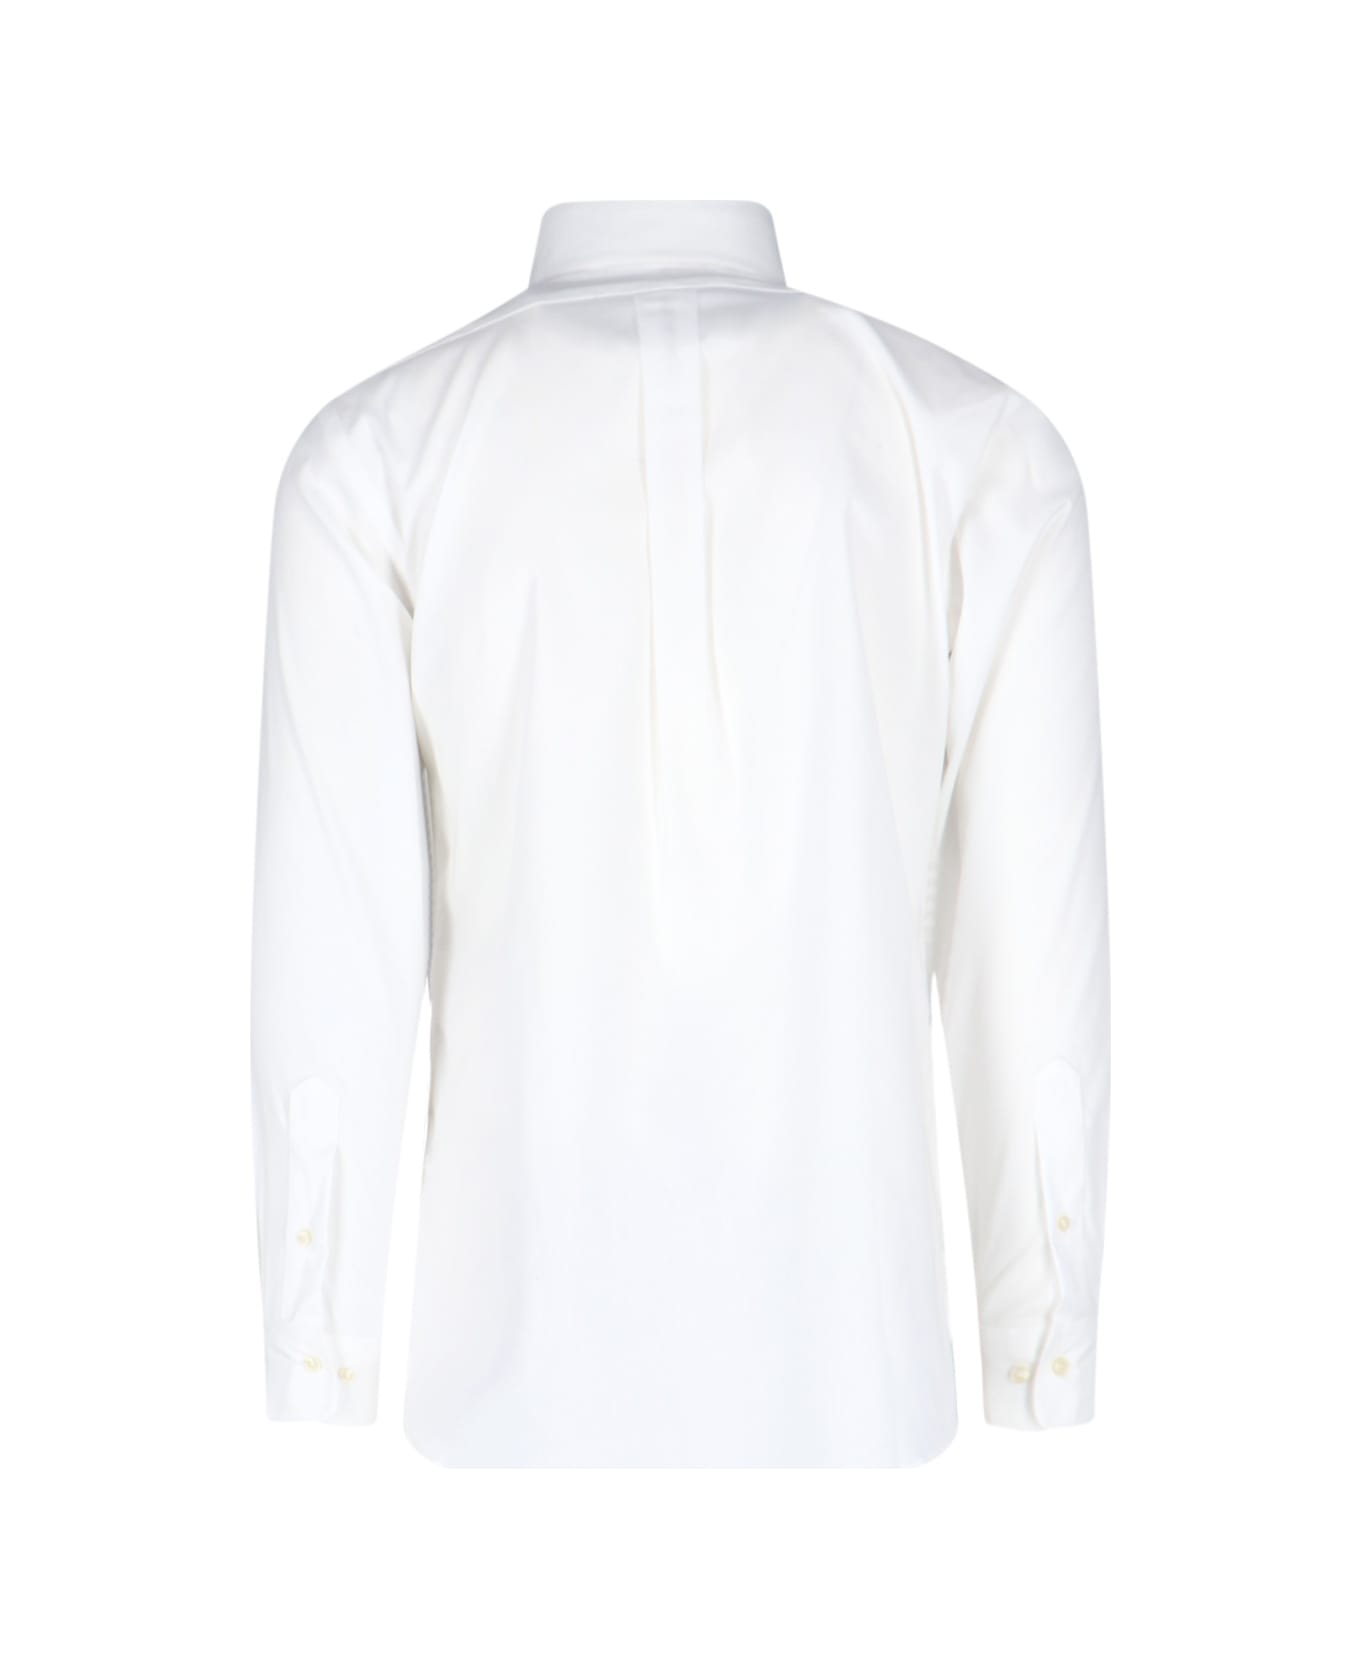 Polo Ralph Lauren Oxford Shirt - White